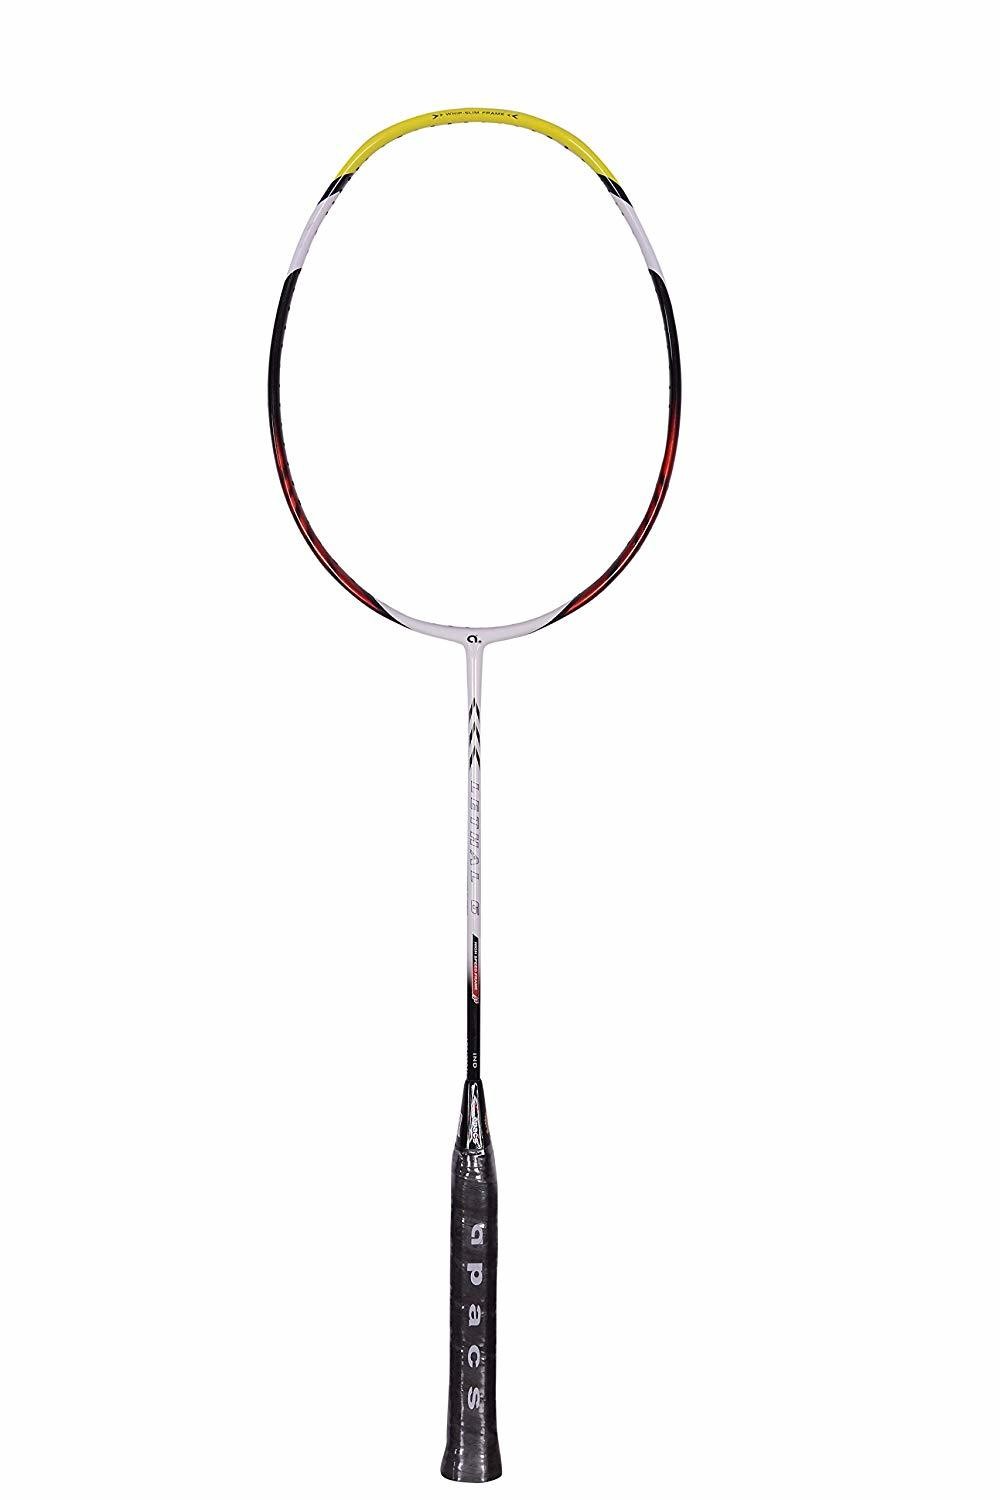 Apacs Lethal 6 Yellow Badminton Racquet